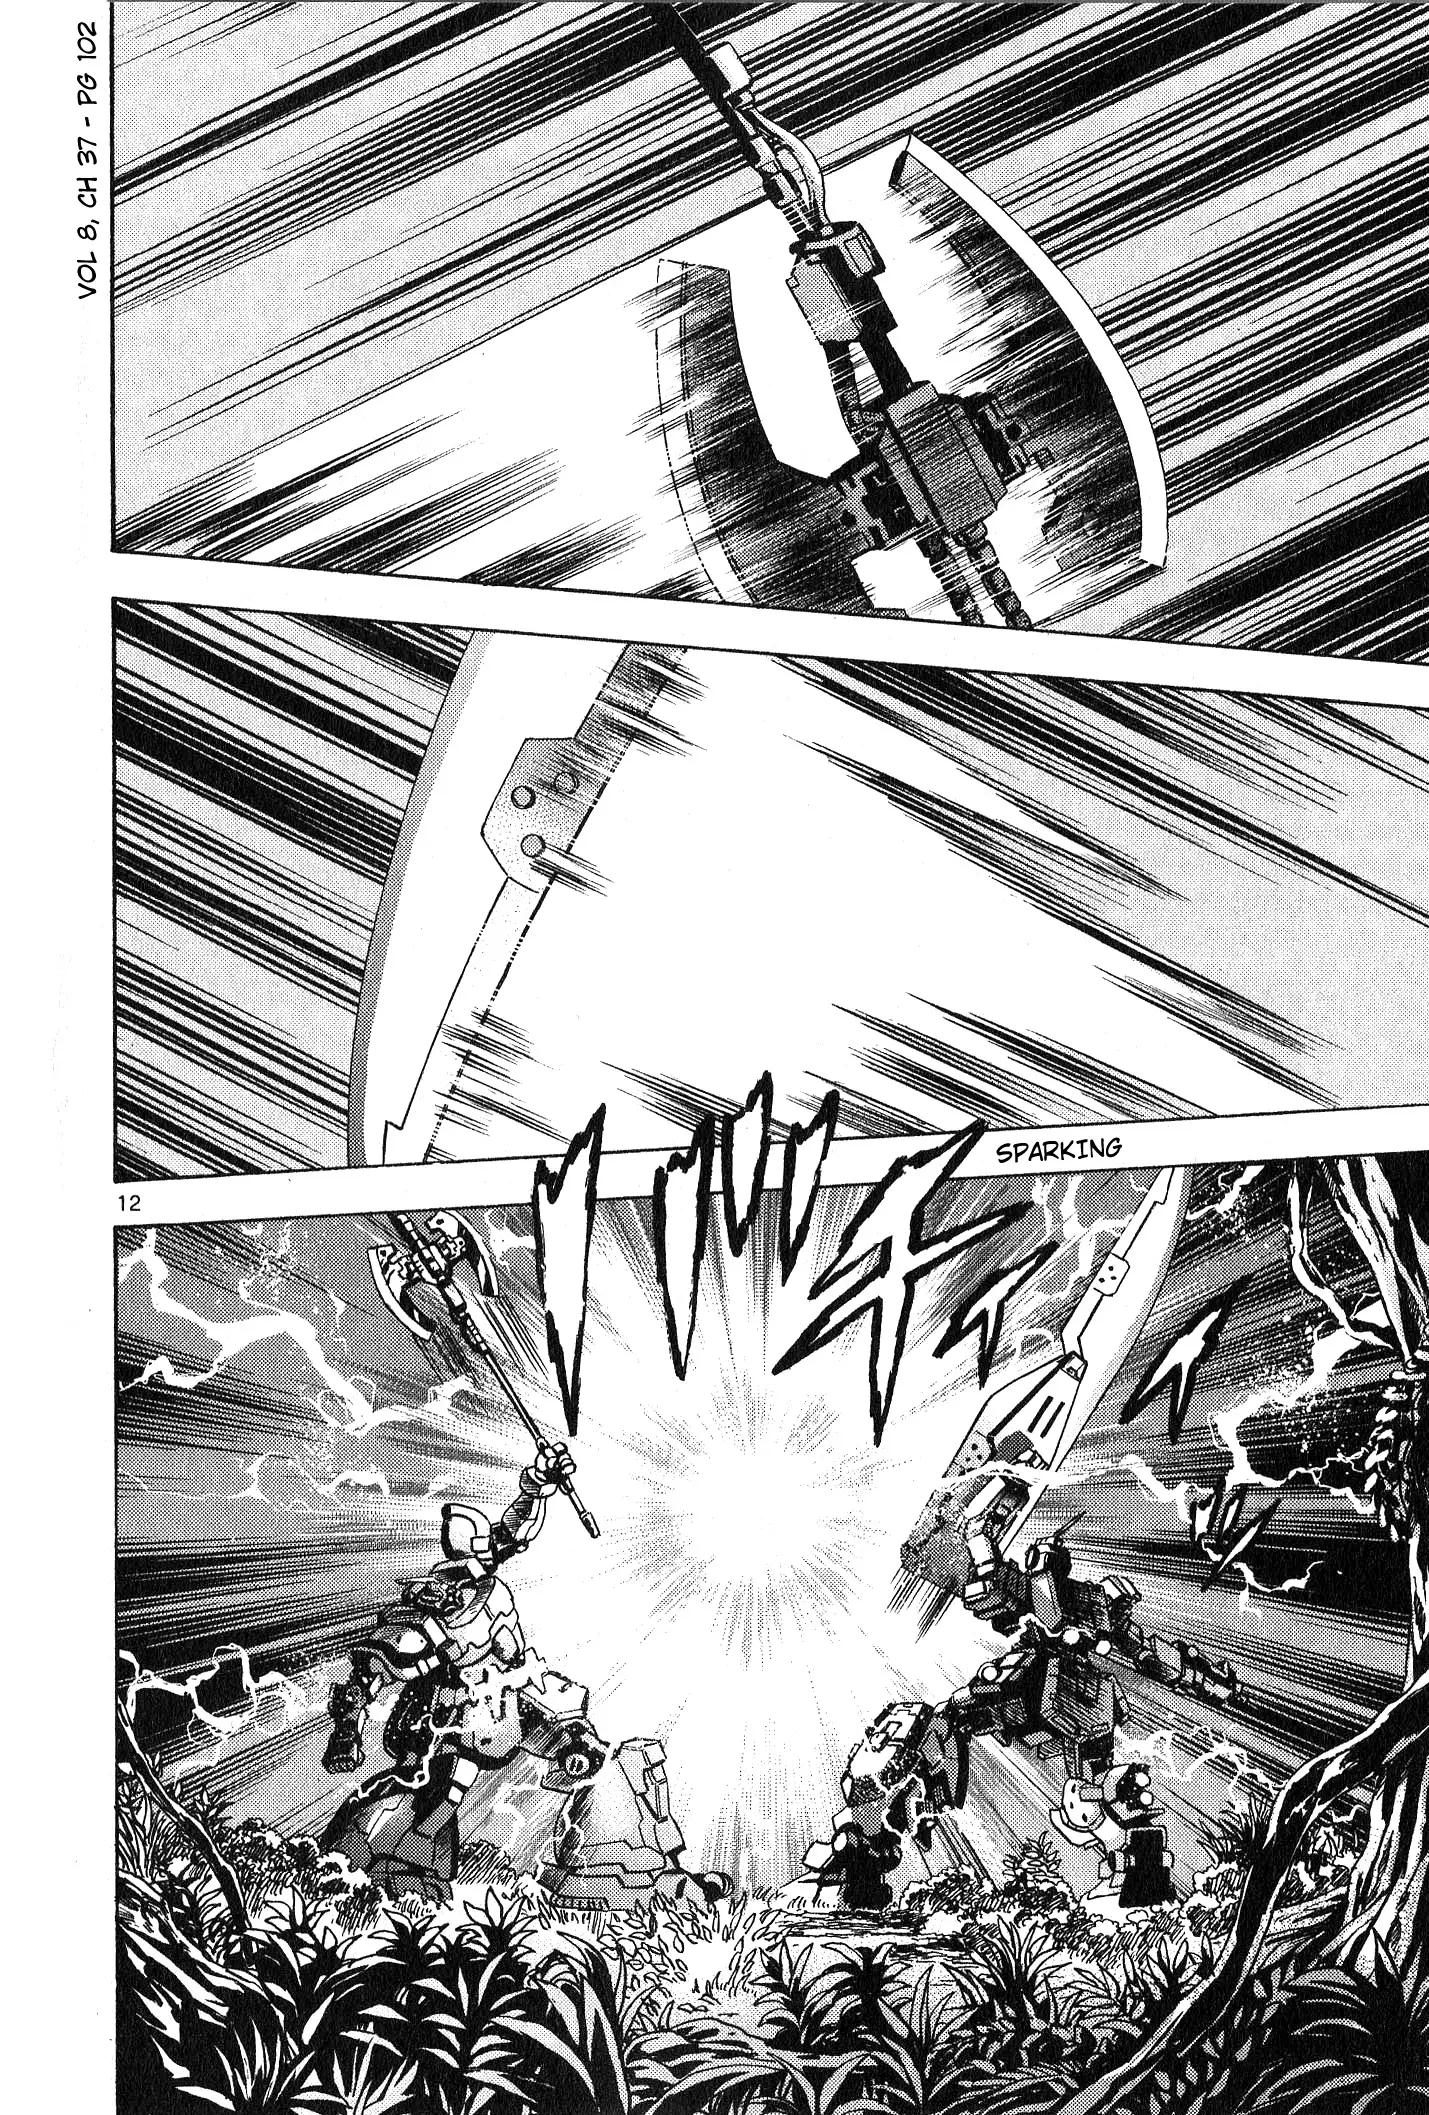 Mobile Suit Gundam Aggressor - 37 page 12-05b5188e